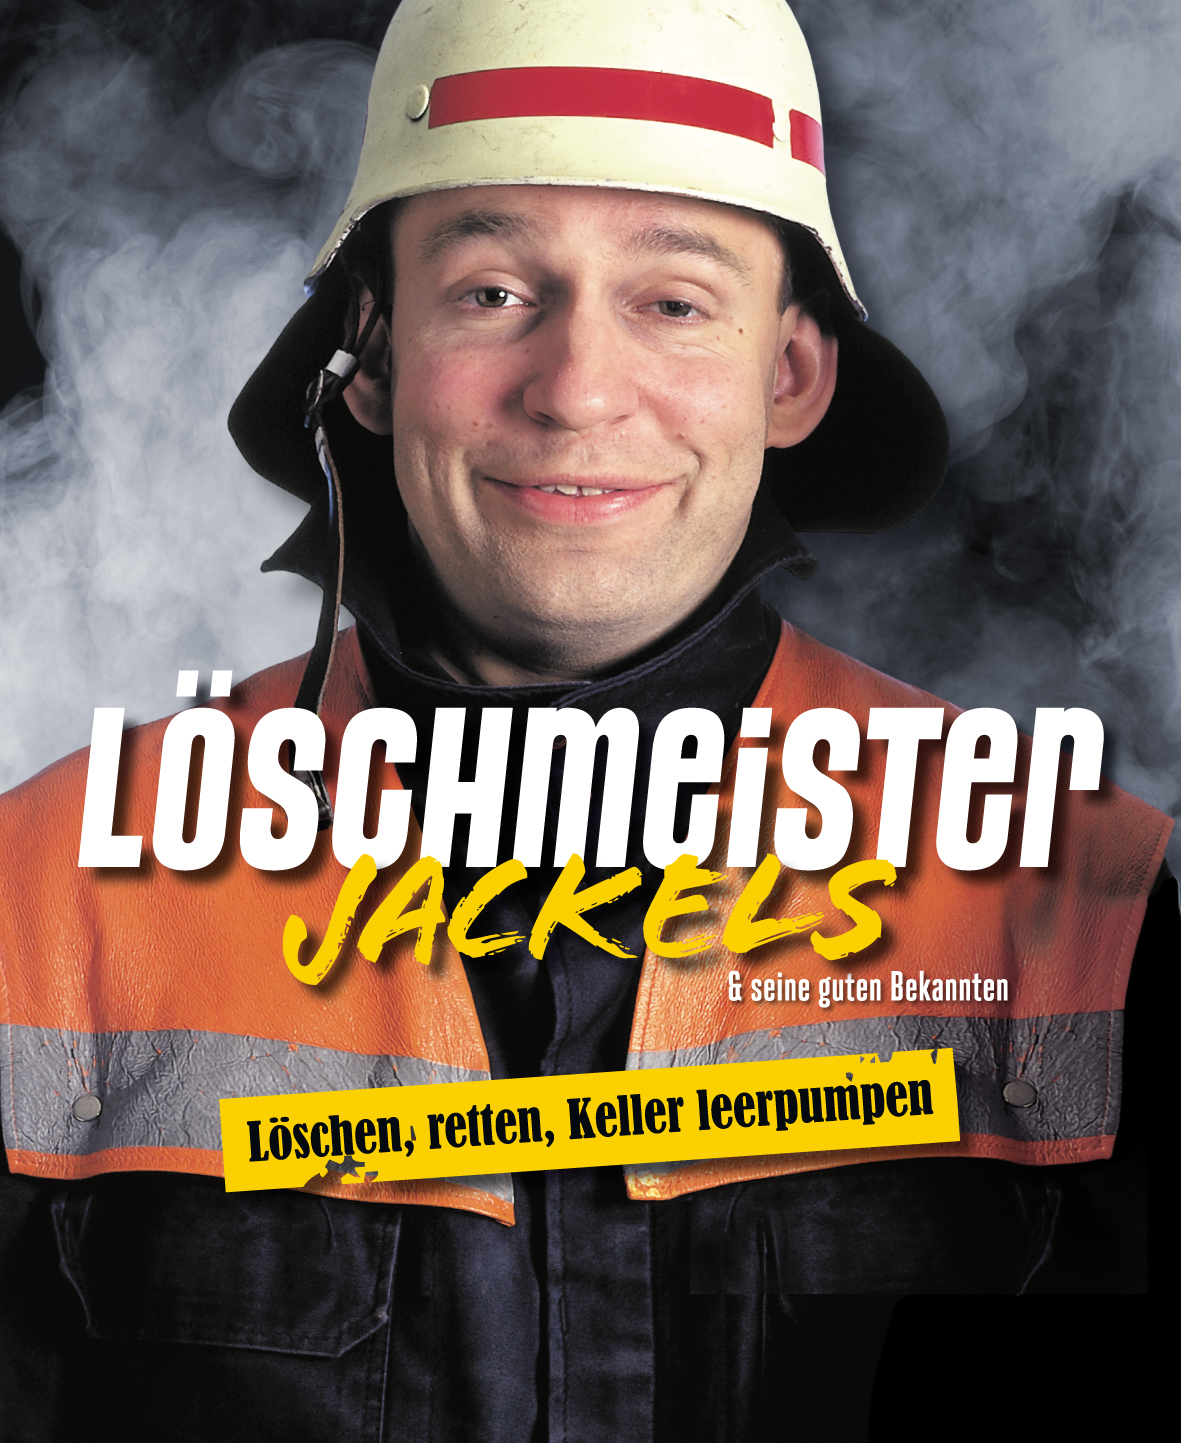 Löschmeister Josef Jackels - "Löschen, Retten, Keller Leerpumpen"